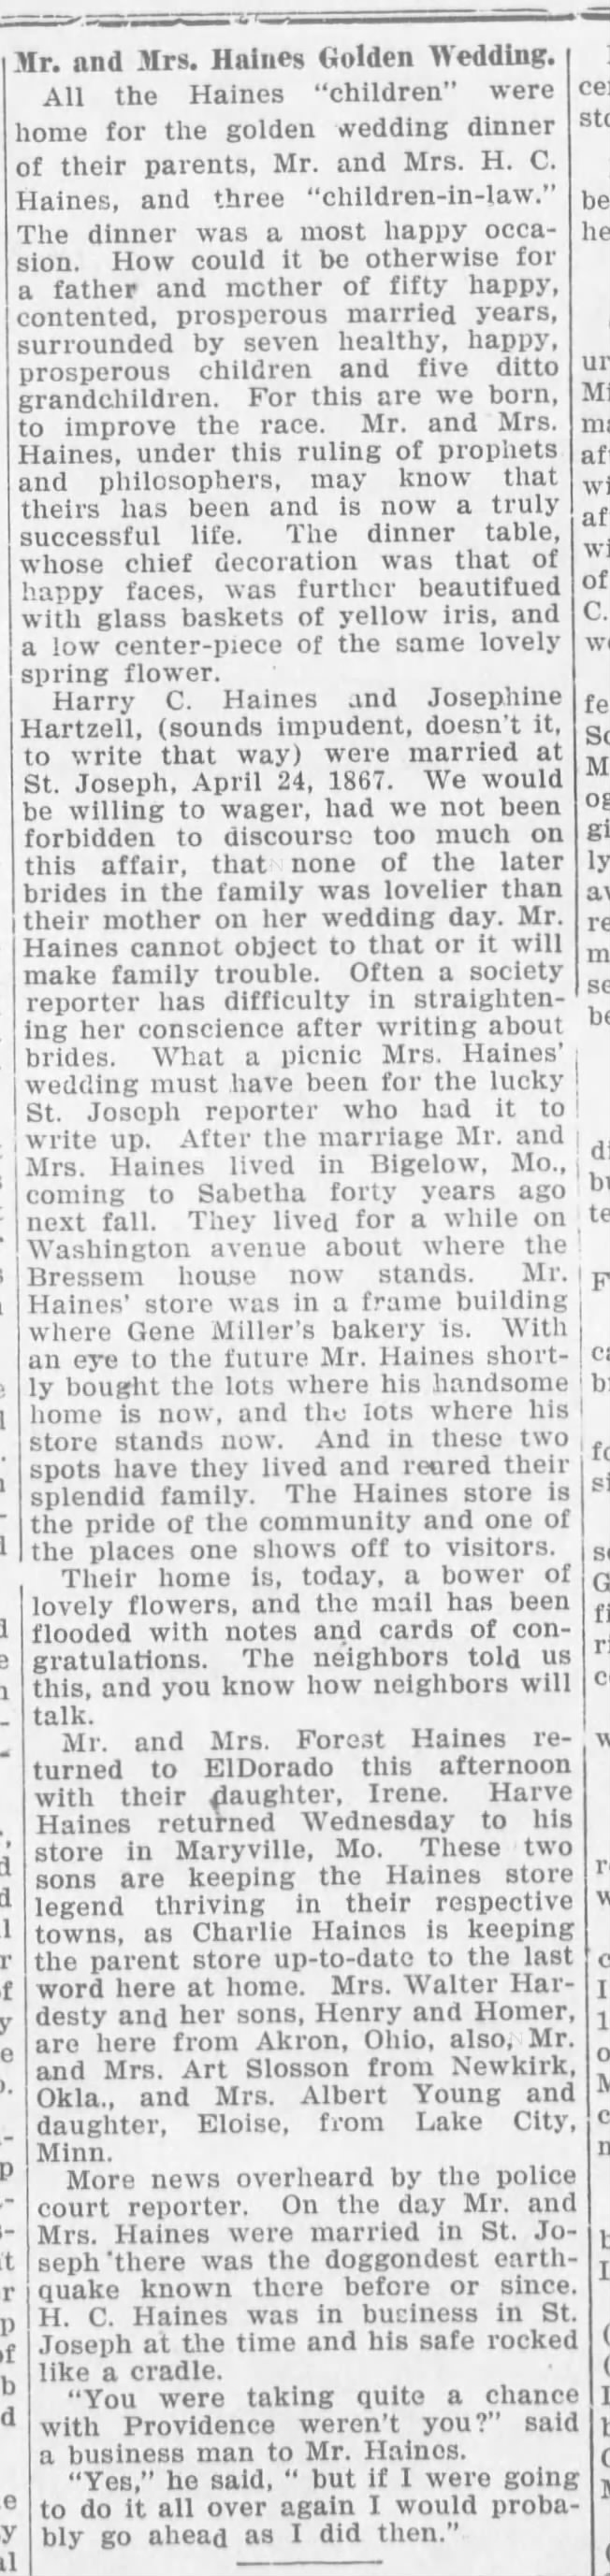 50th Wedding Anniversary, Henry Clay Haines (1844-1924) and Josephine Hartzell (1850-1925)